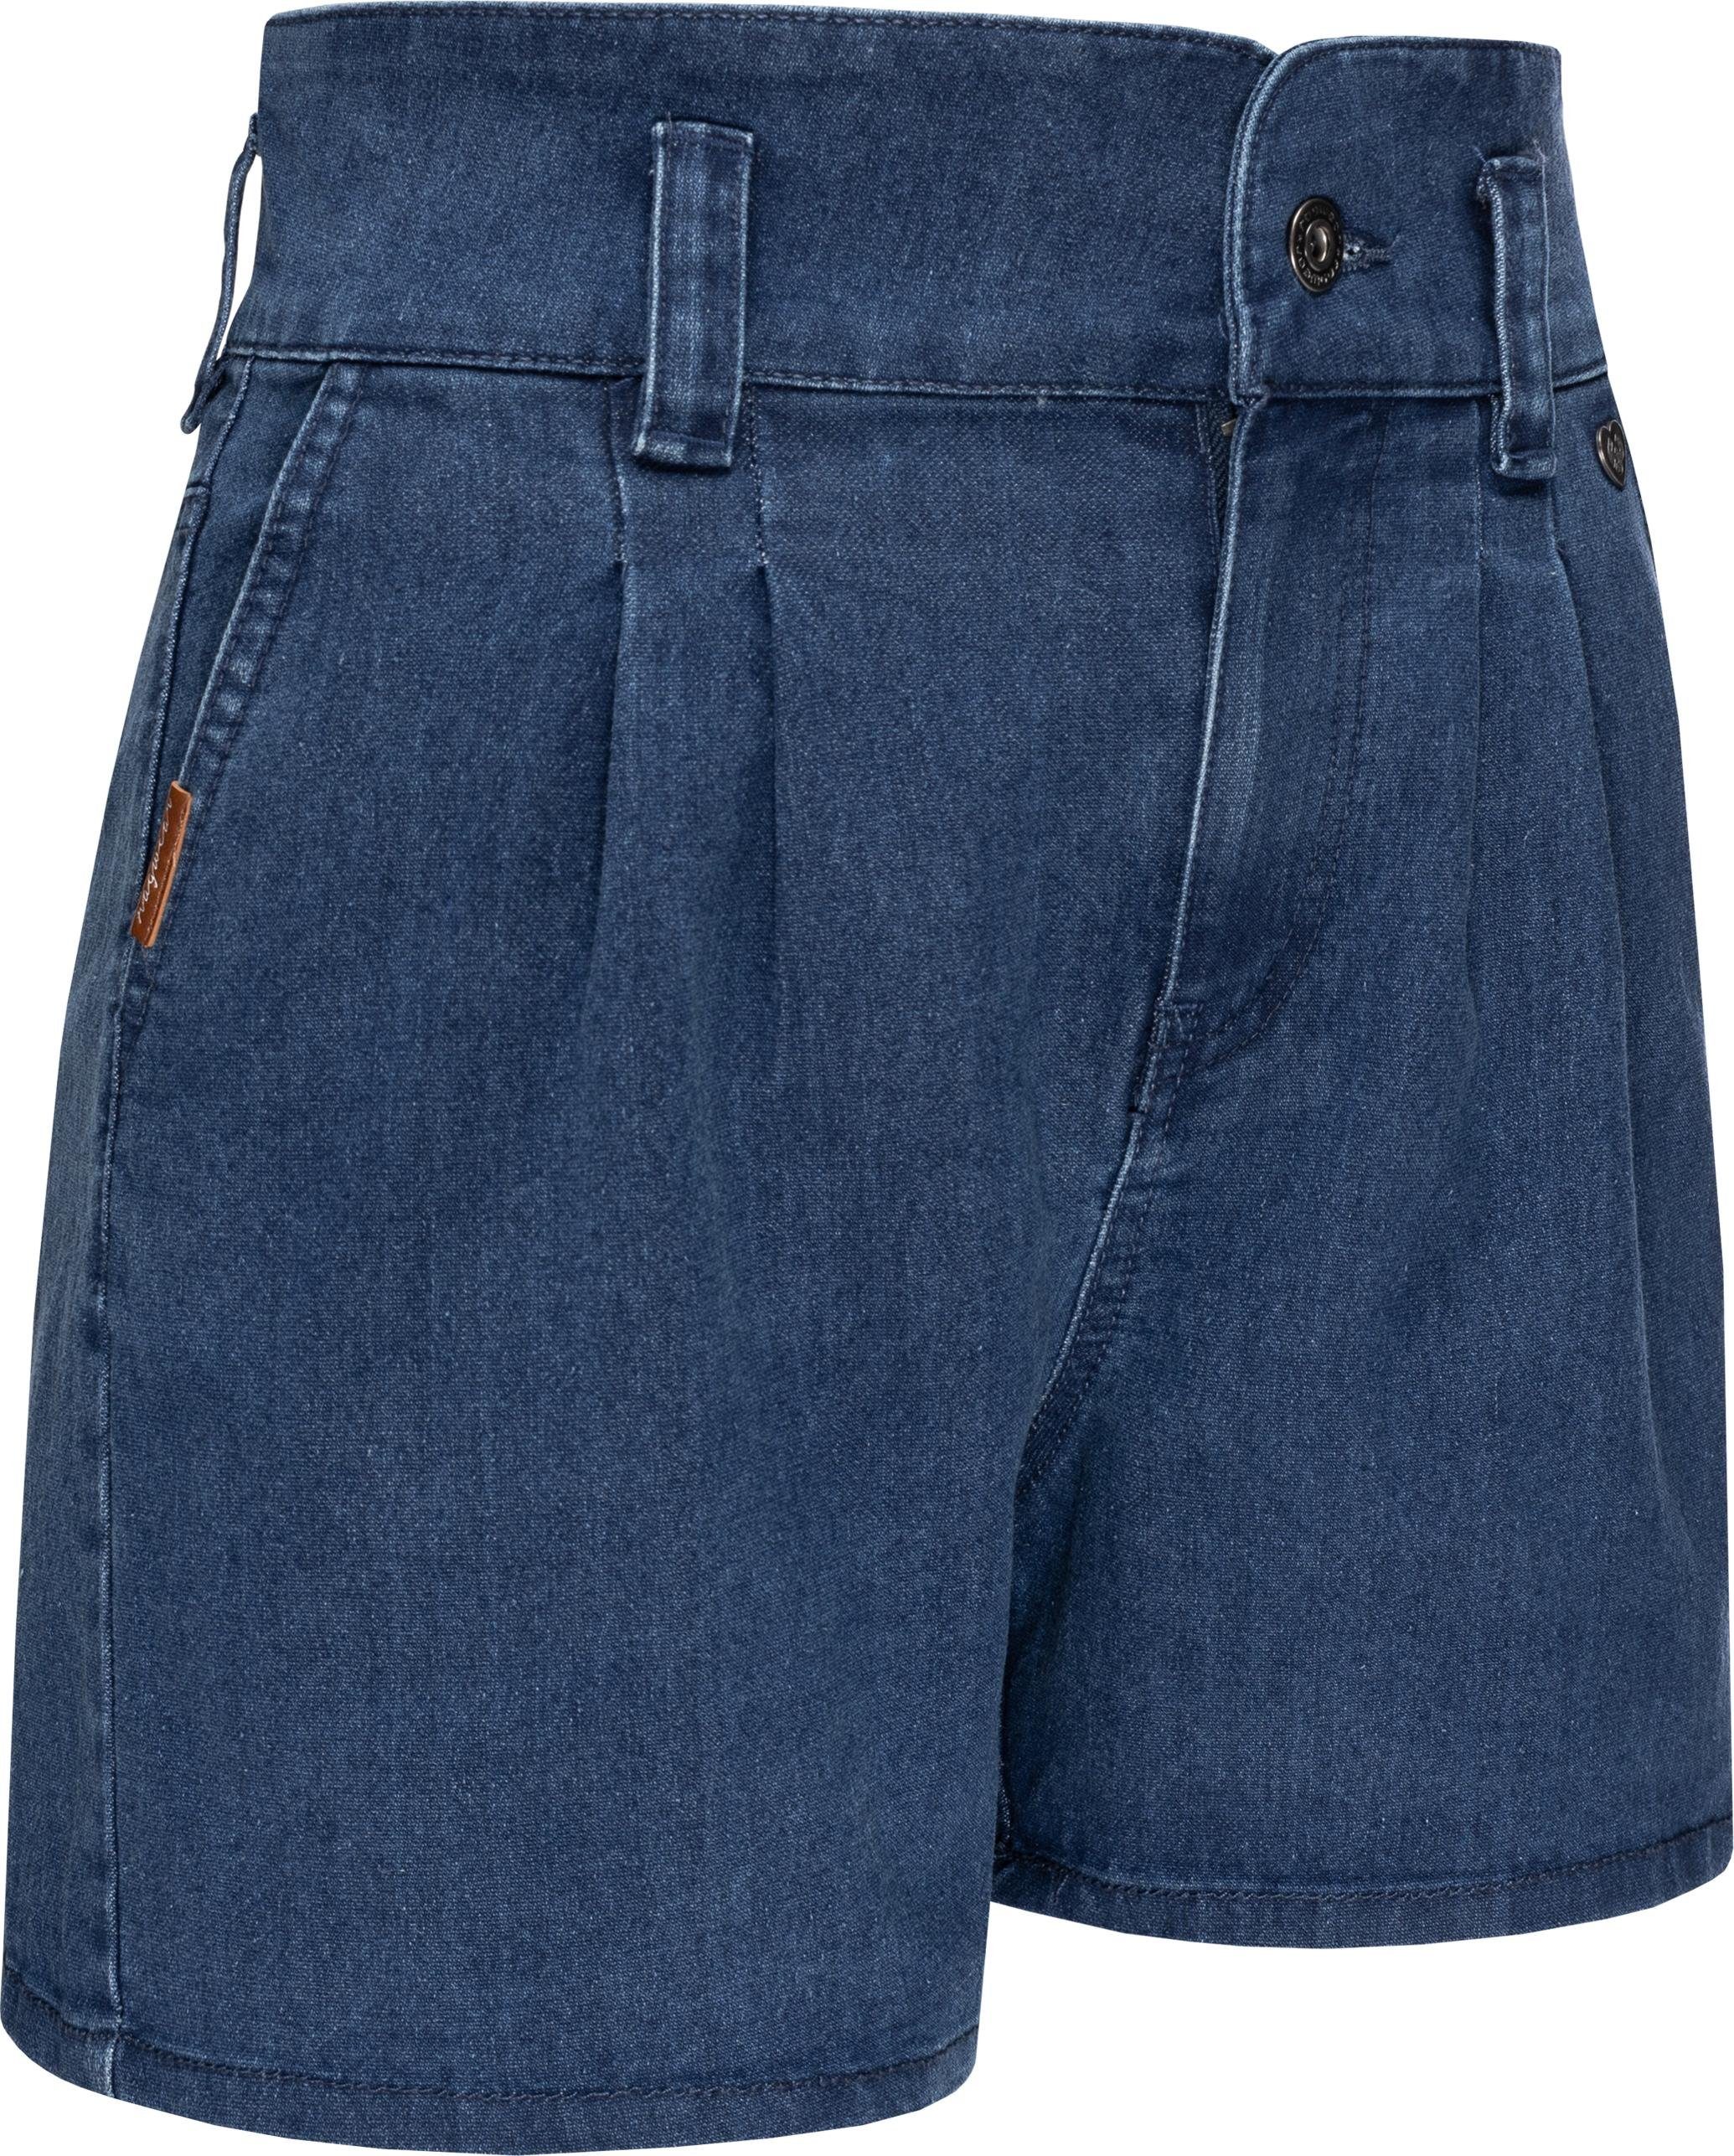 Ragwear Shorts Suzzie stylische, kurze Sommerhose in Jeansoptik indigo | Shorts